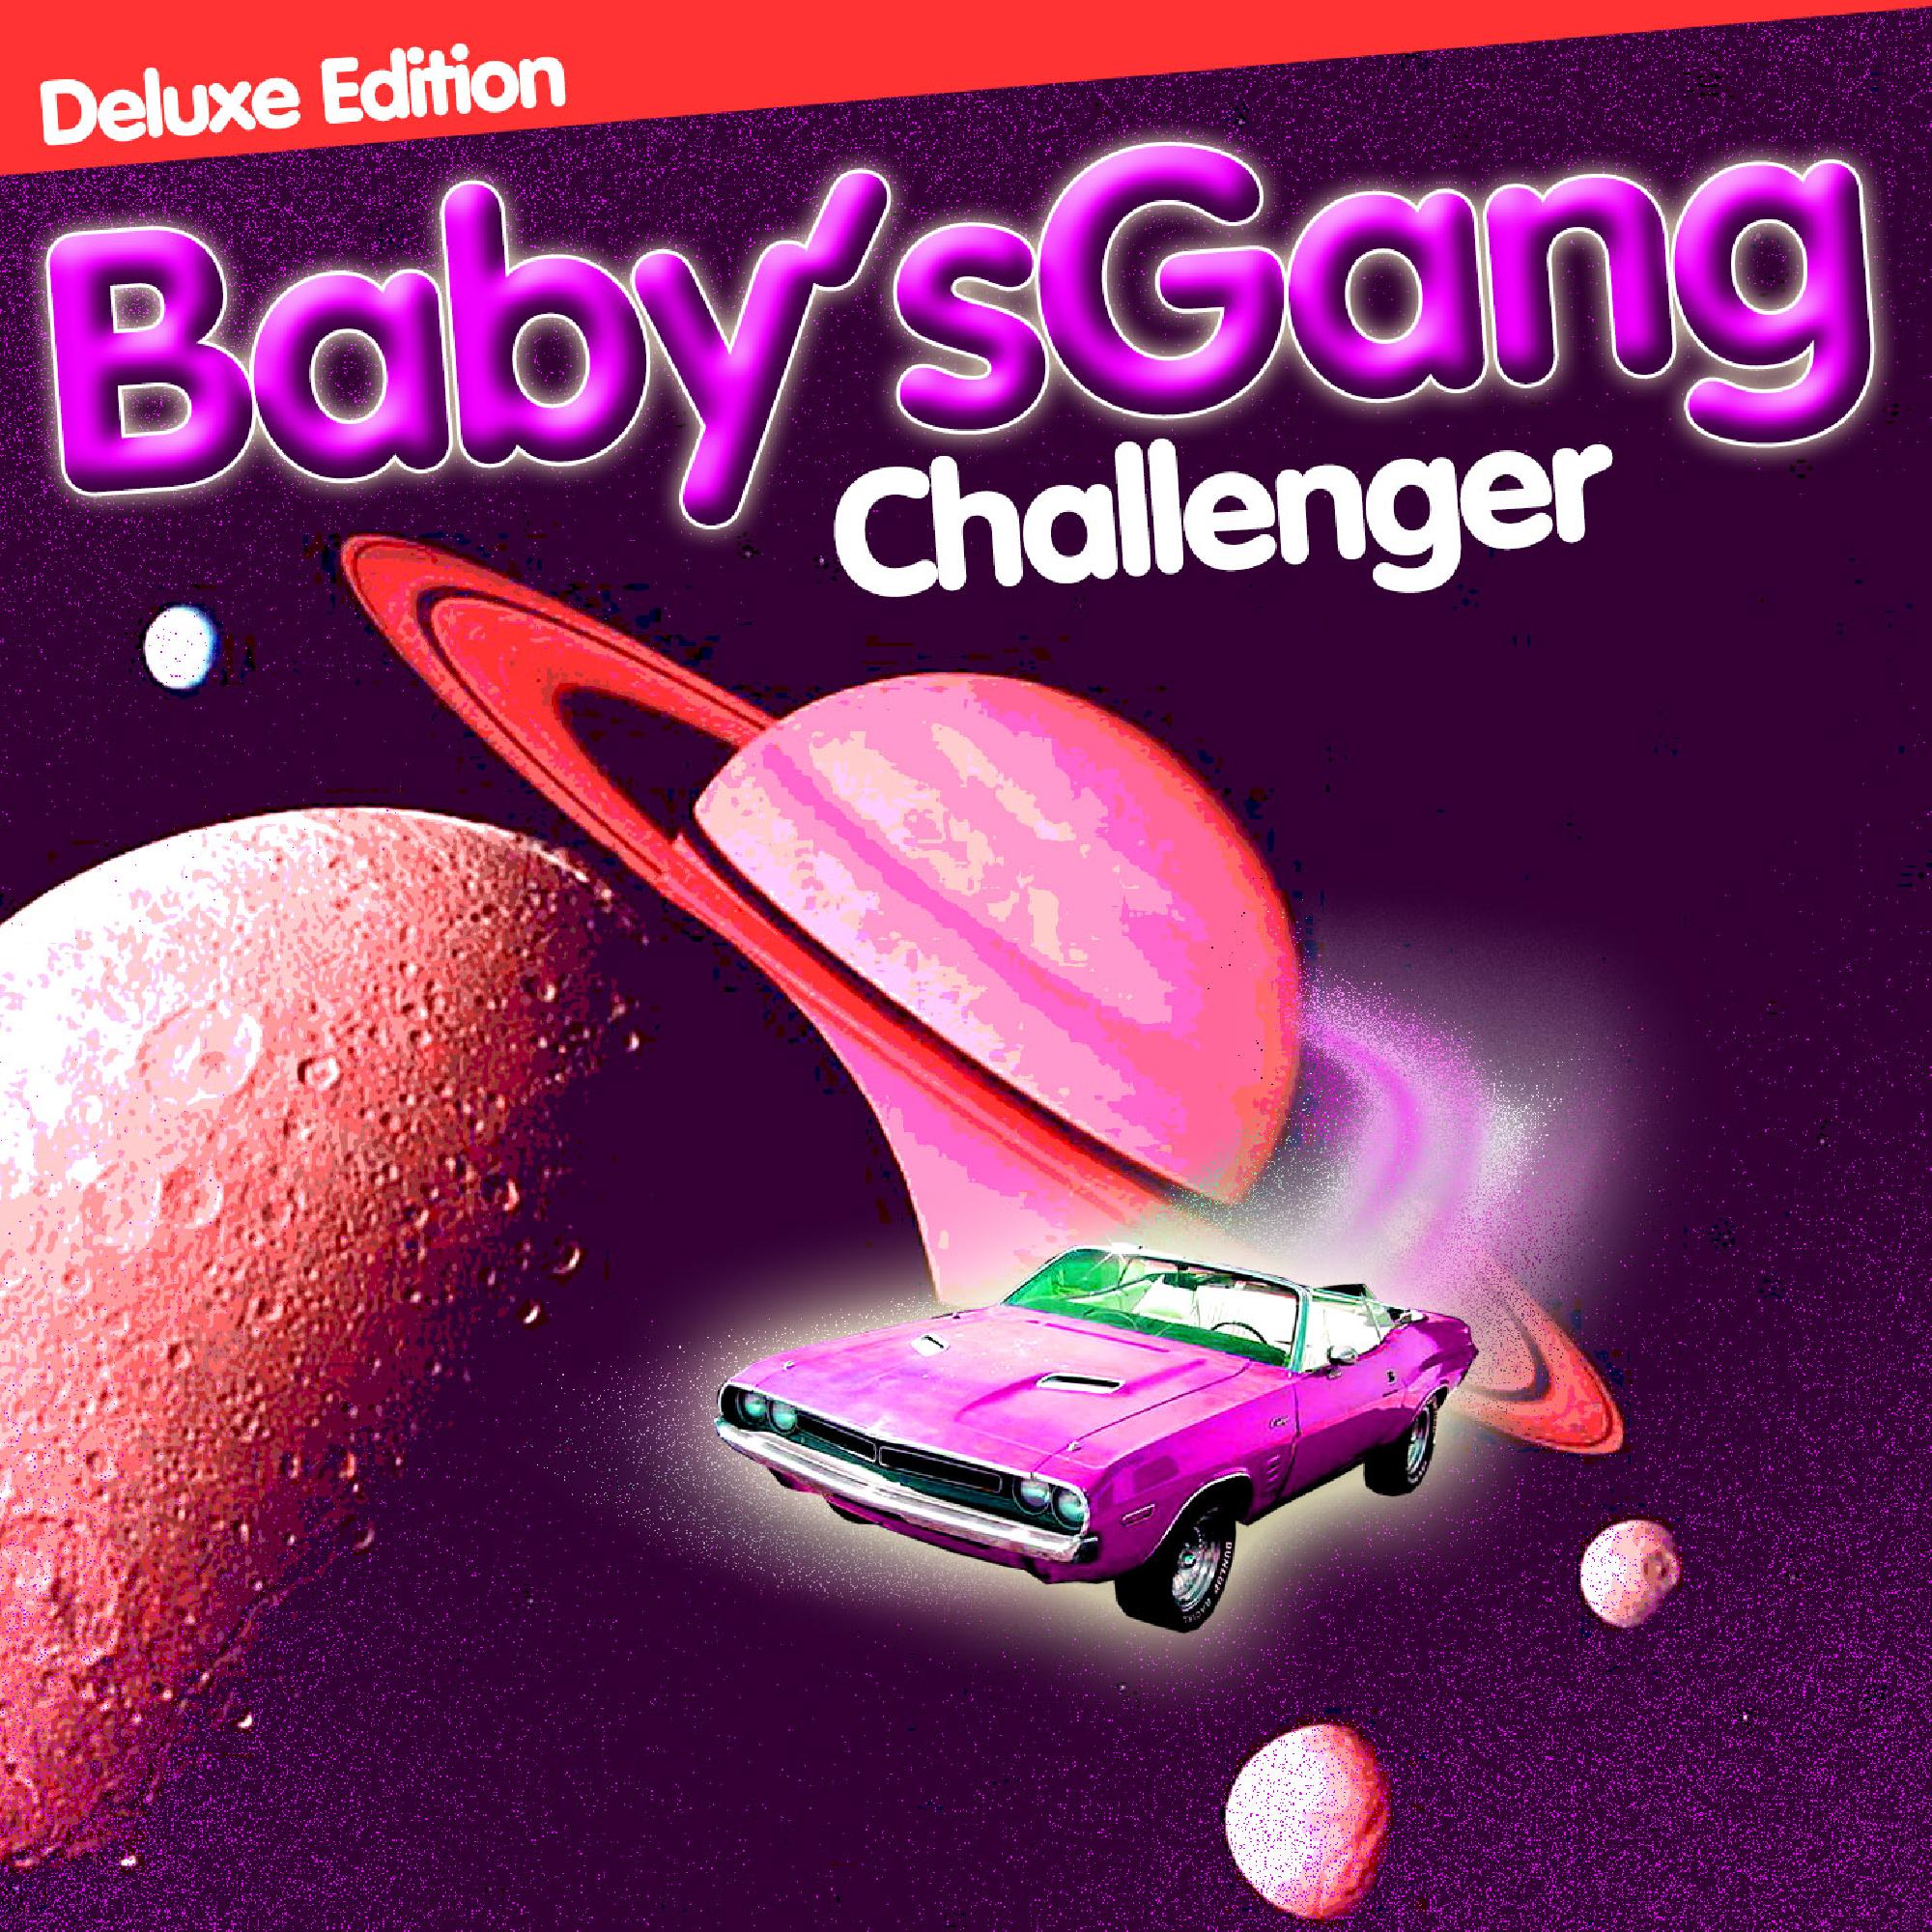 Gang challenger. Baby's gang - Challenger (1985) CD. Baby s gang Challenger. Babys gang Challenger винил. Baby s gang пластинка.